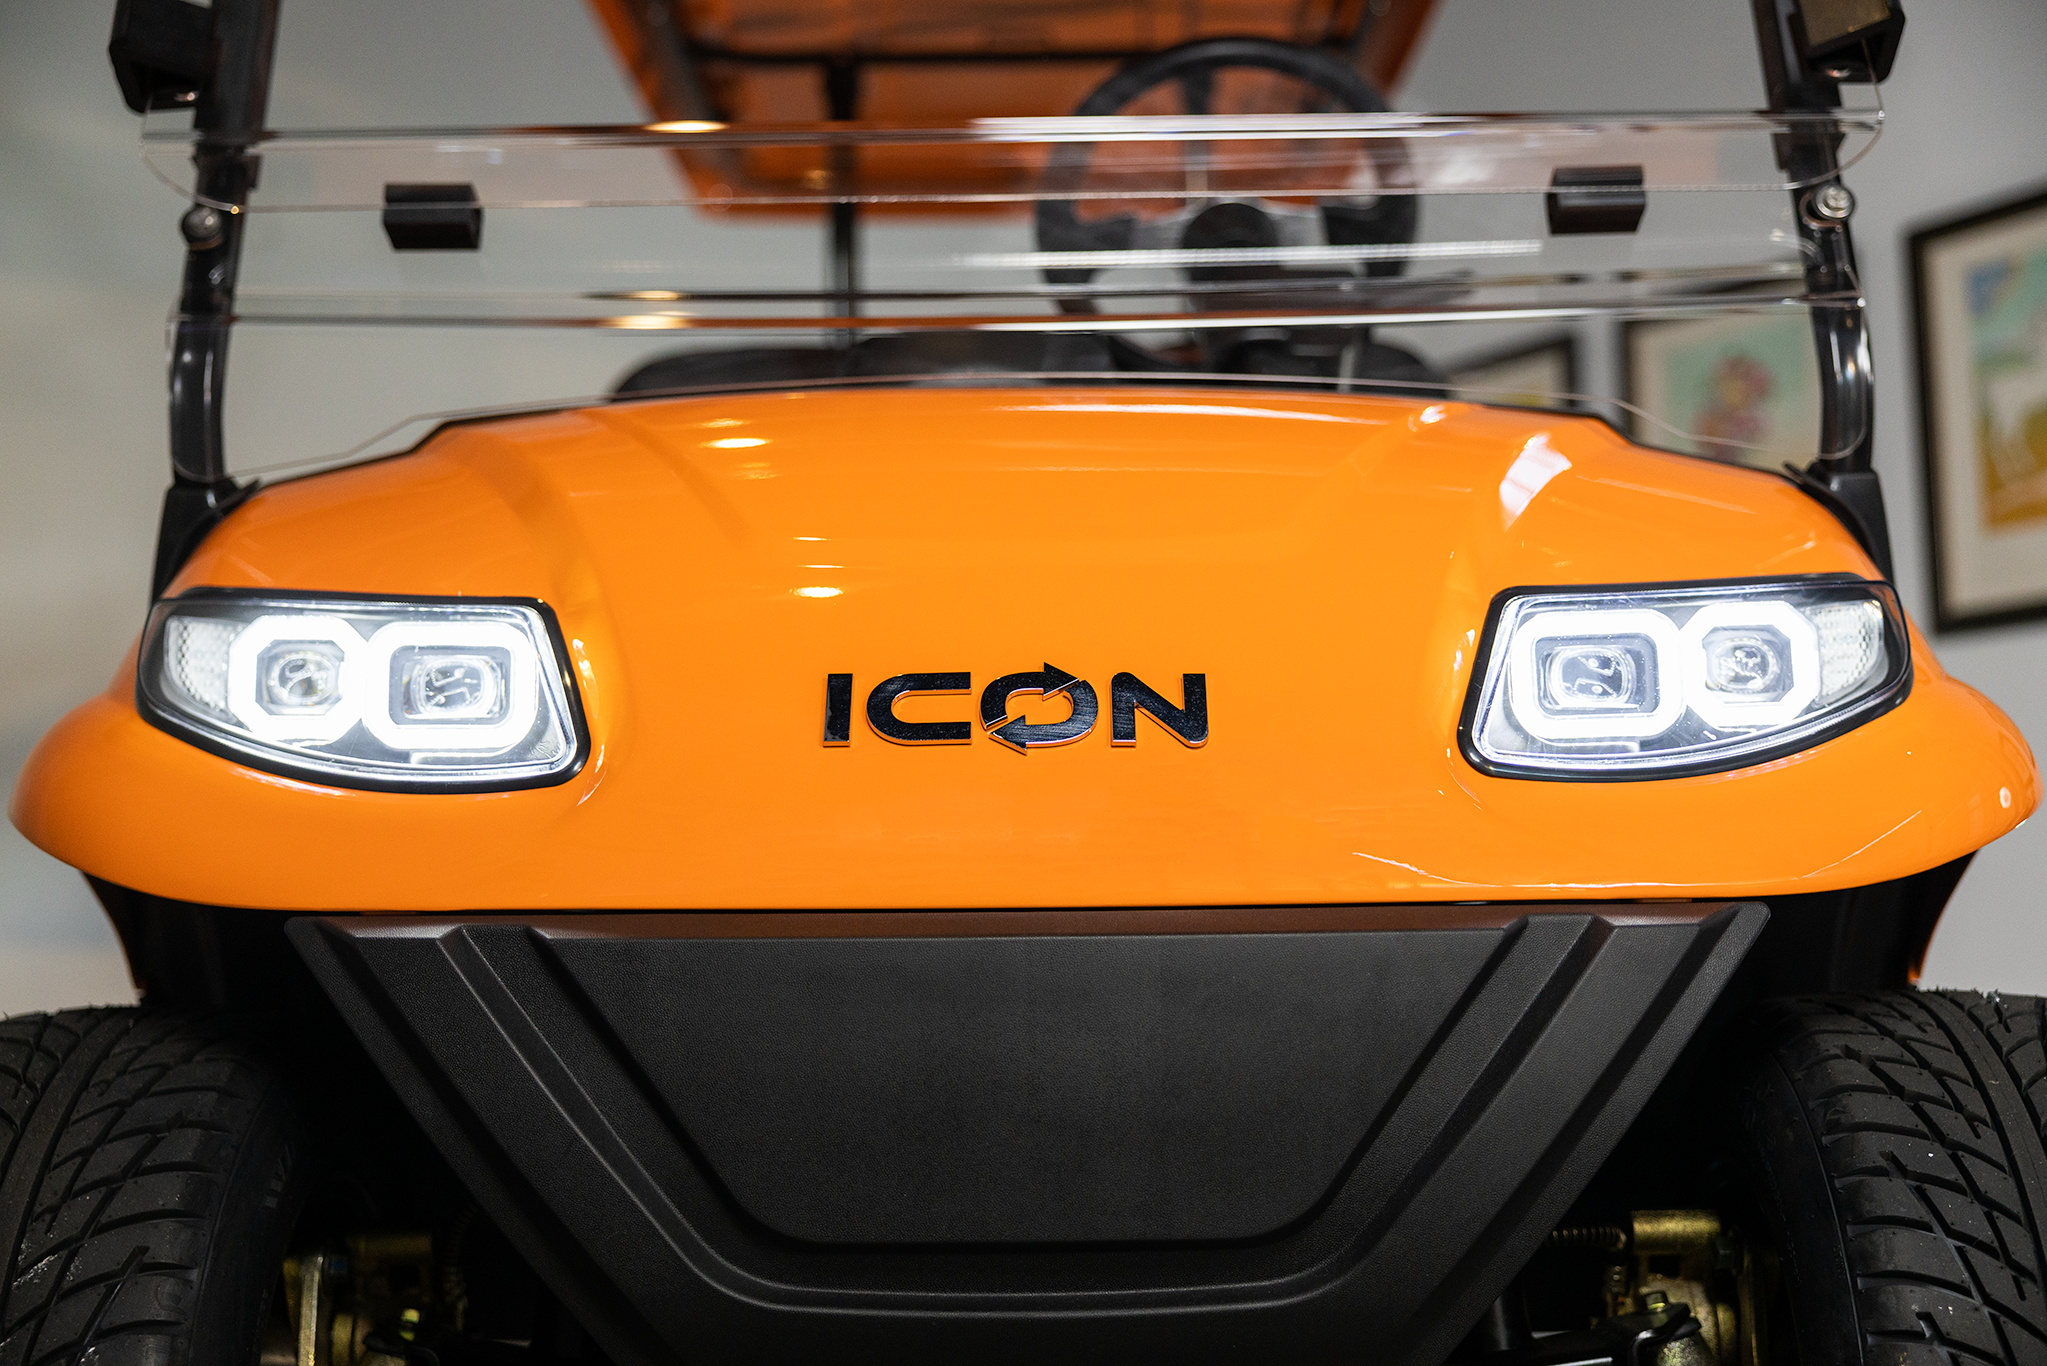 ICON3 orange 9